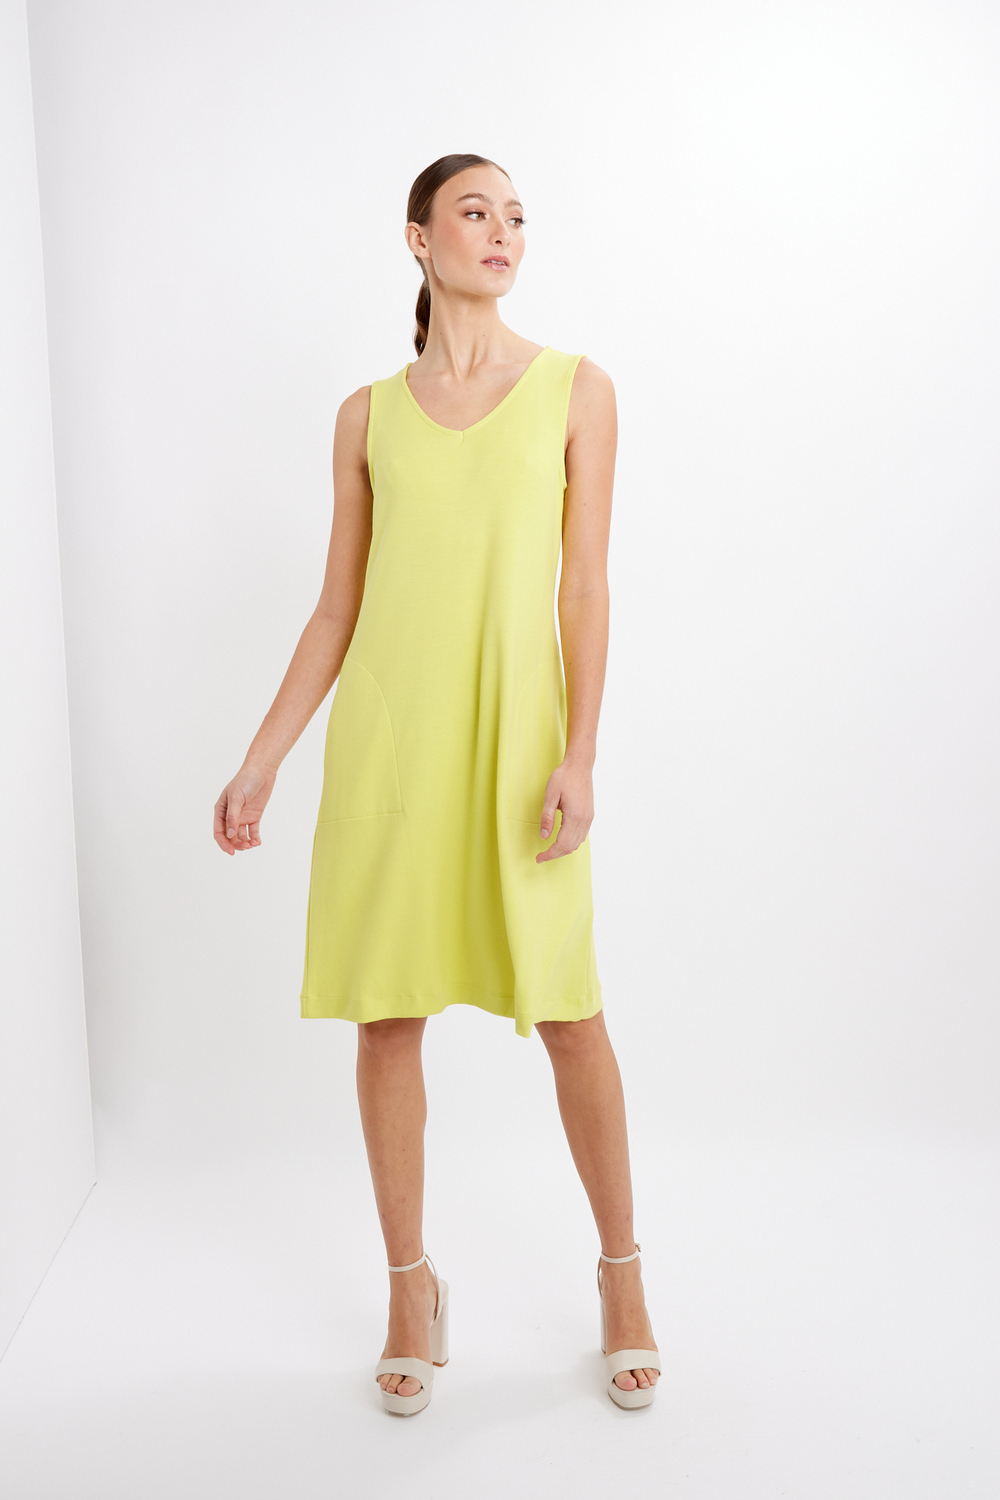 Sleeveless Pleated Mini Dress Style 24703. Citrus